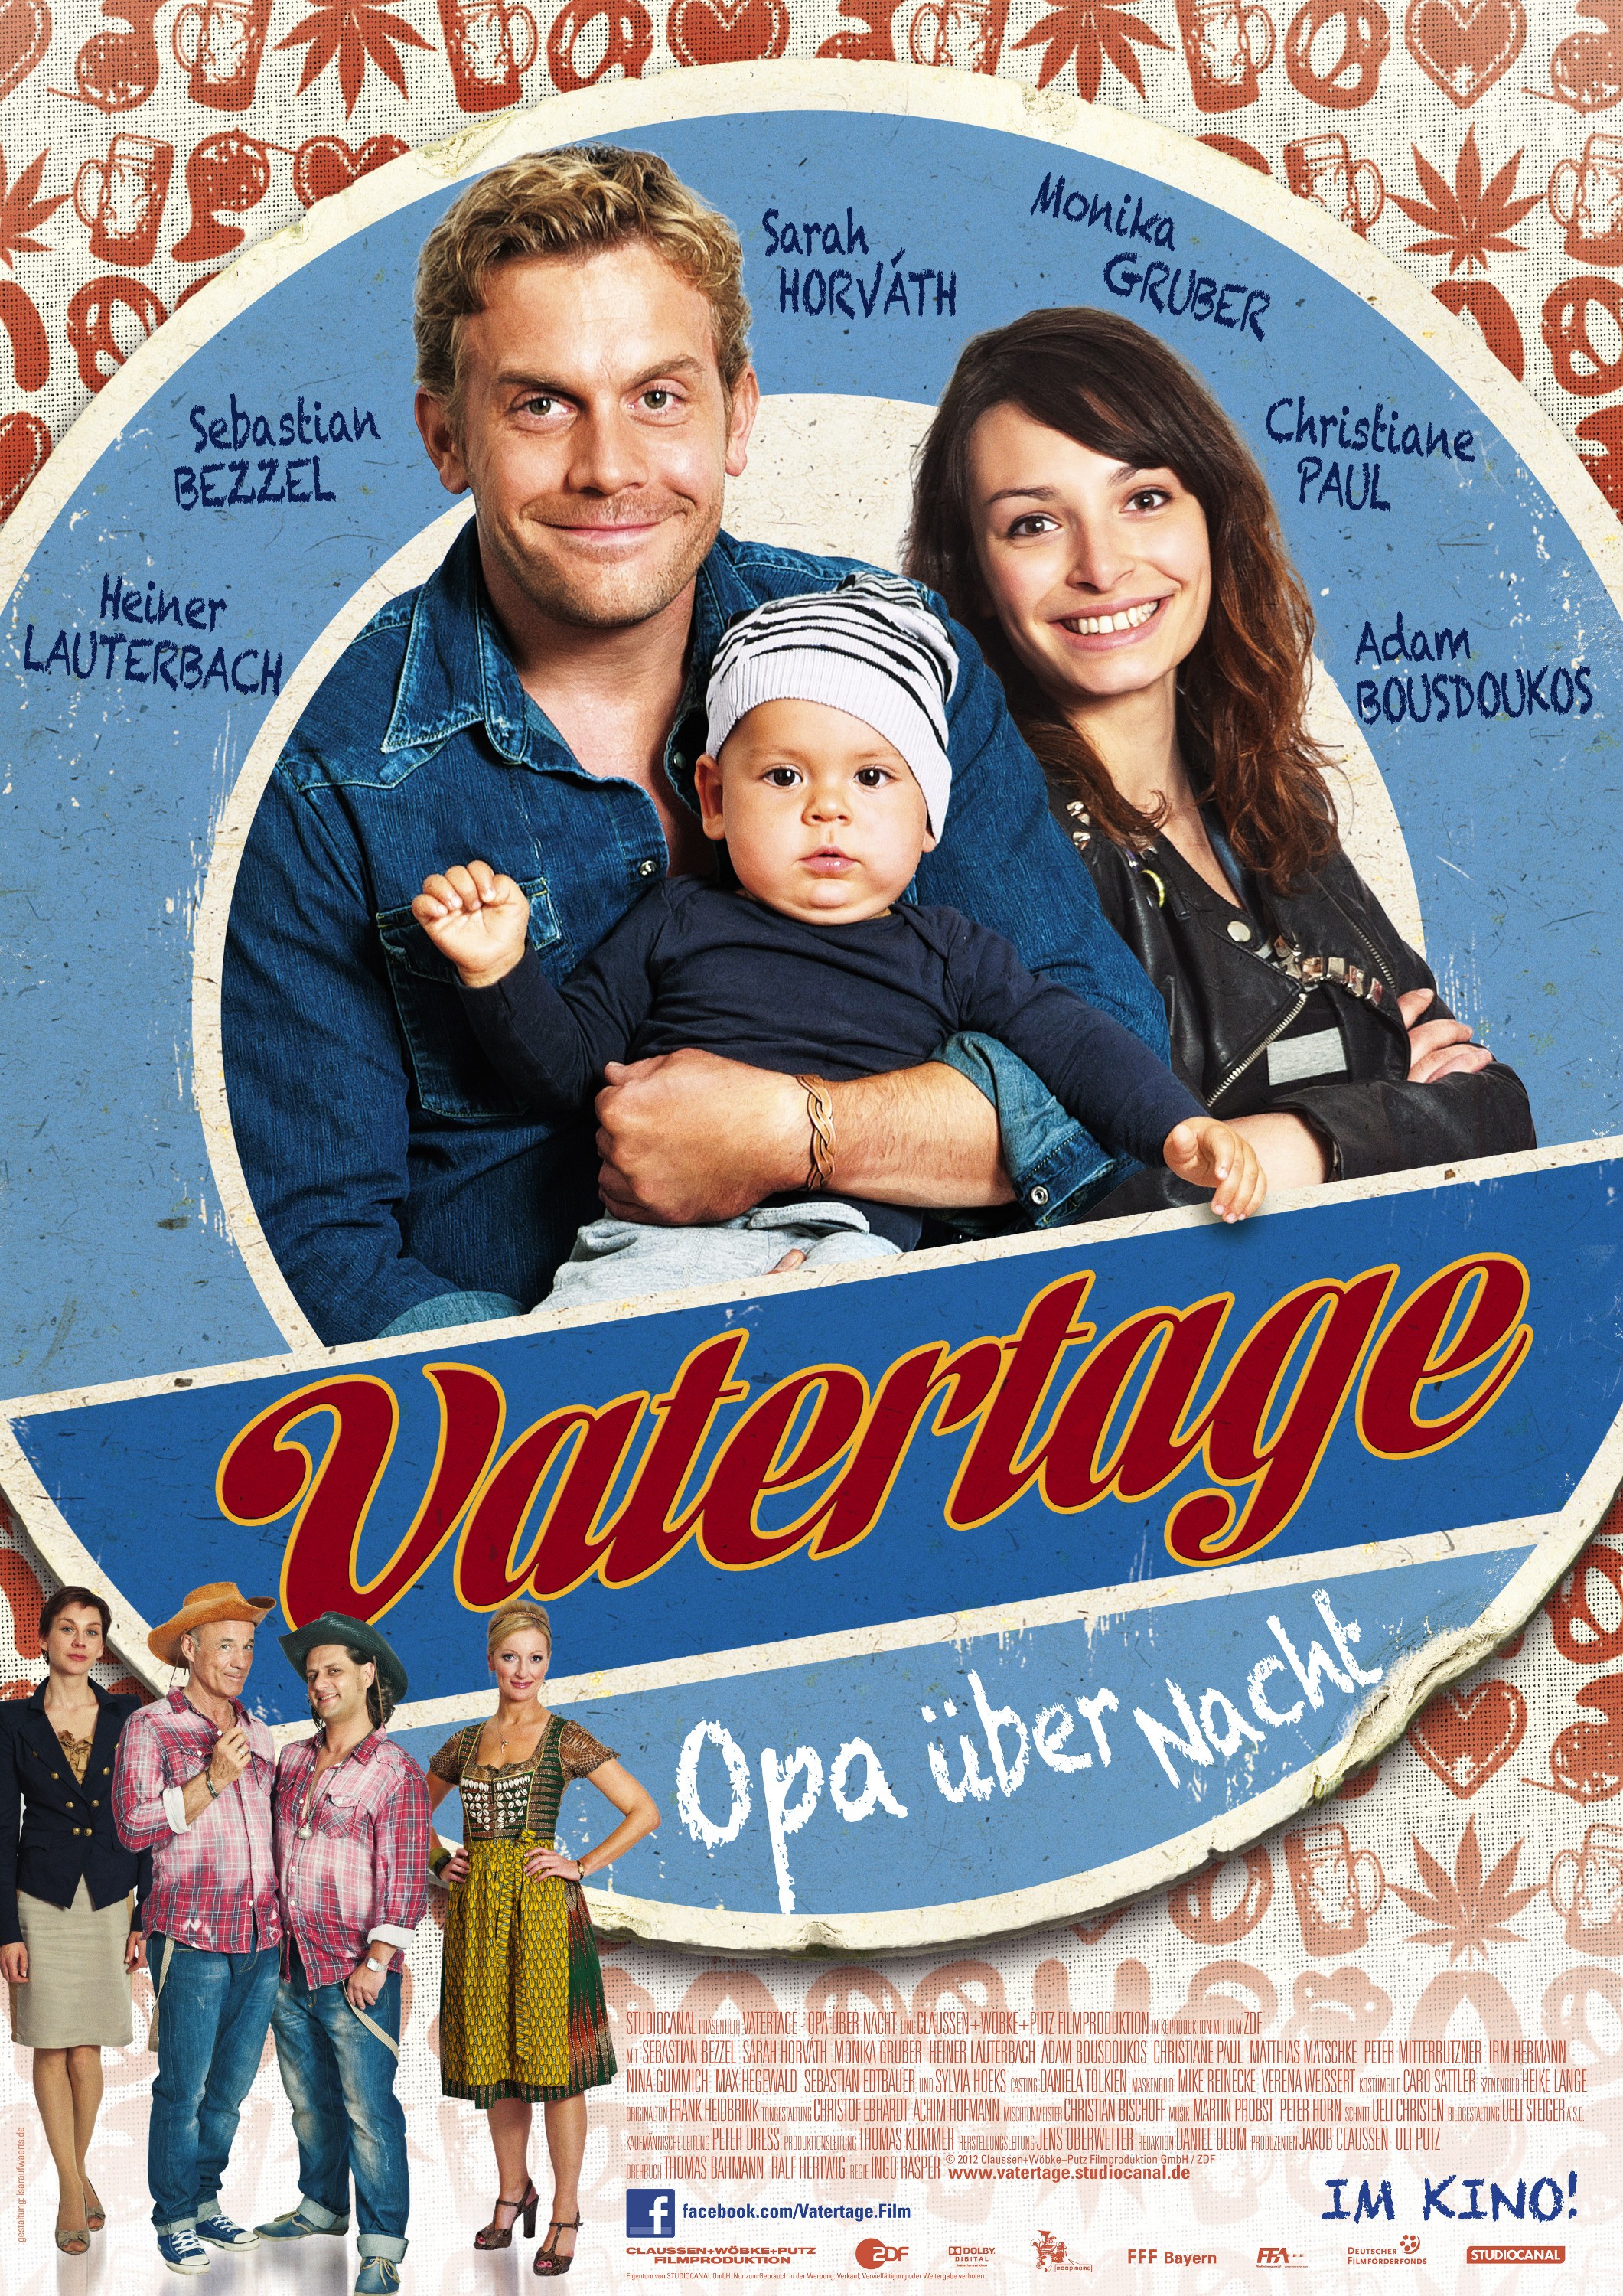 Mega Sized Movie Poster Image for Vatertage - Opa über Nacht 